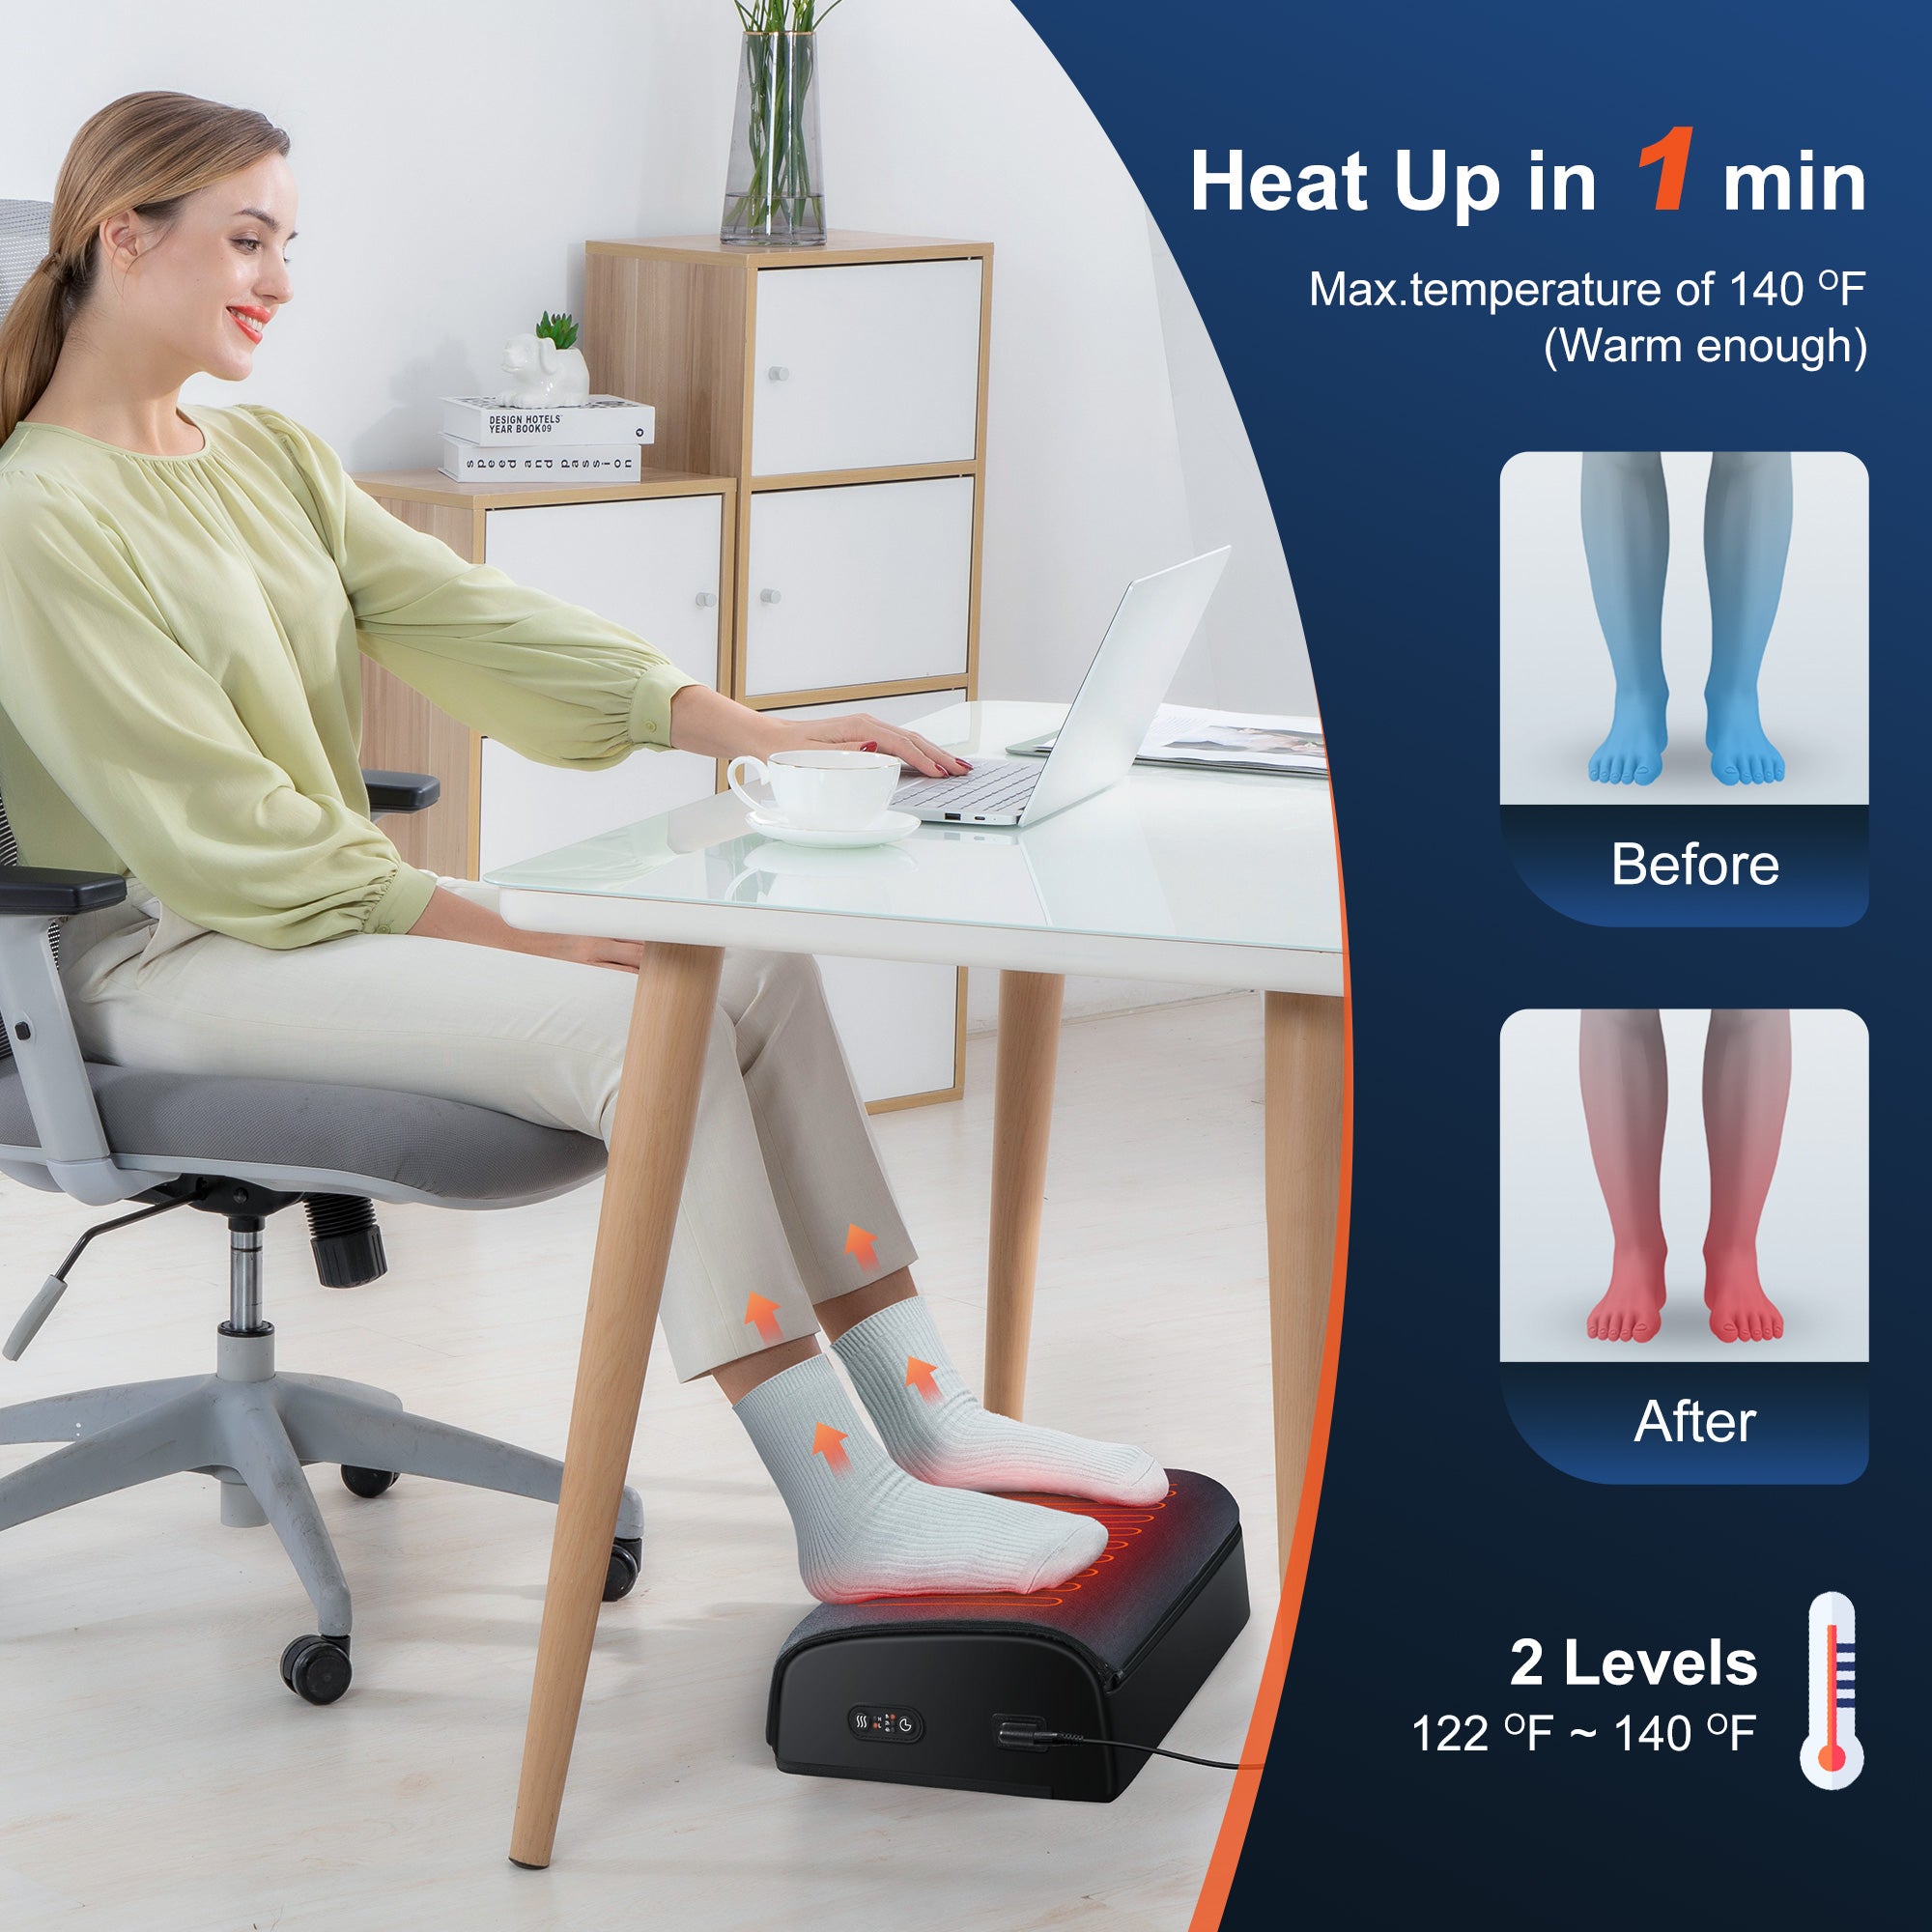 Memory Foam Foot Rest For Under Desk At Work Ergonomic Office Foot Stool